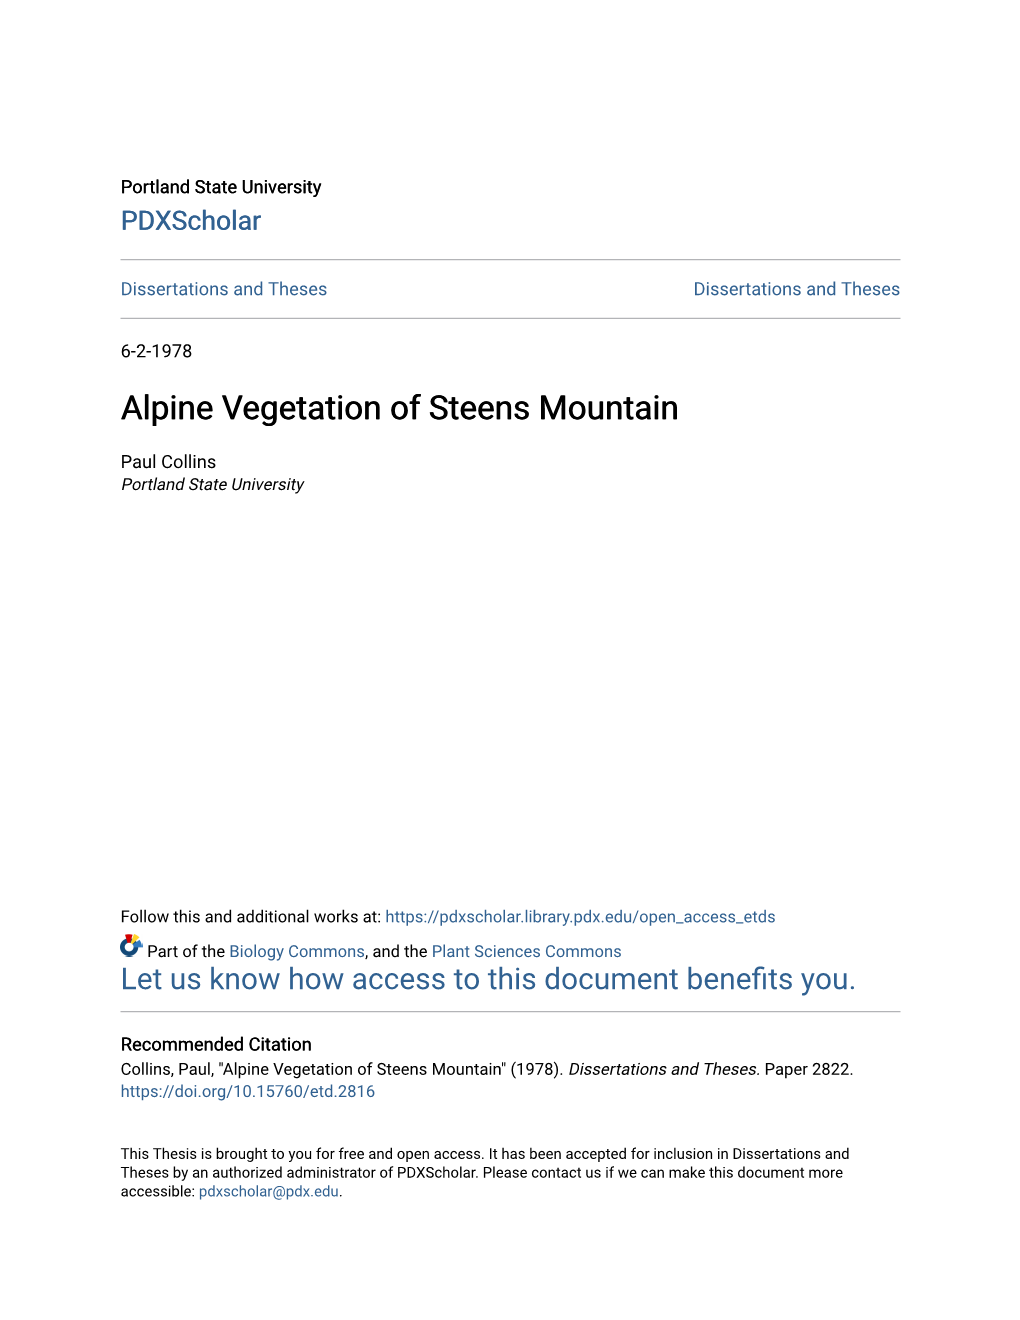 Alpine Vegetation of Steens Mountain